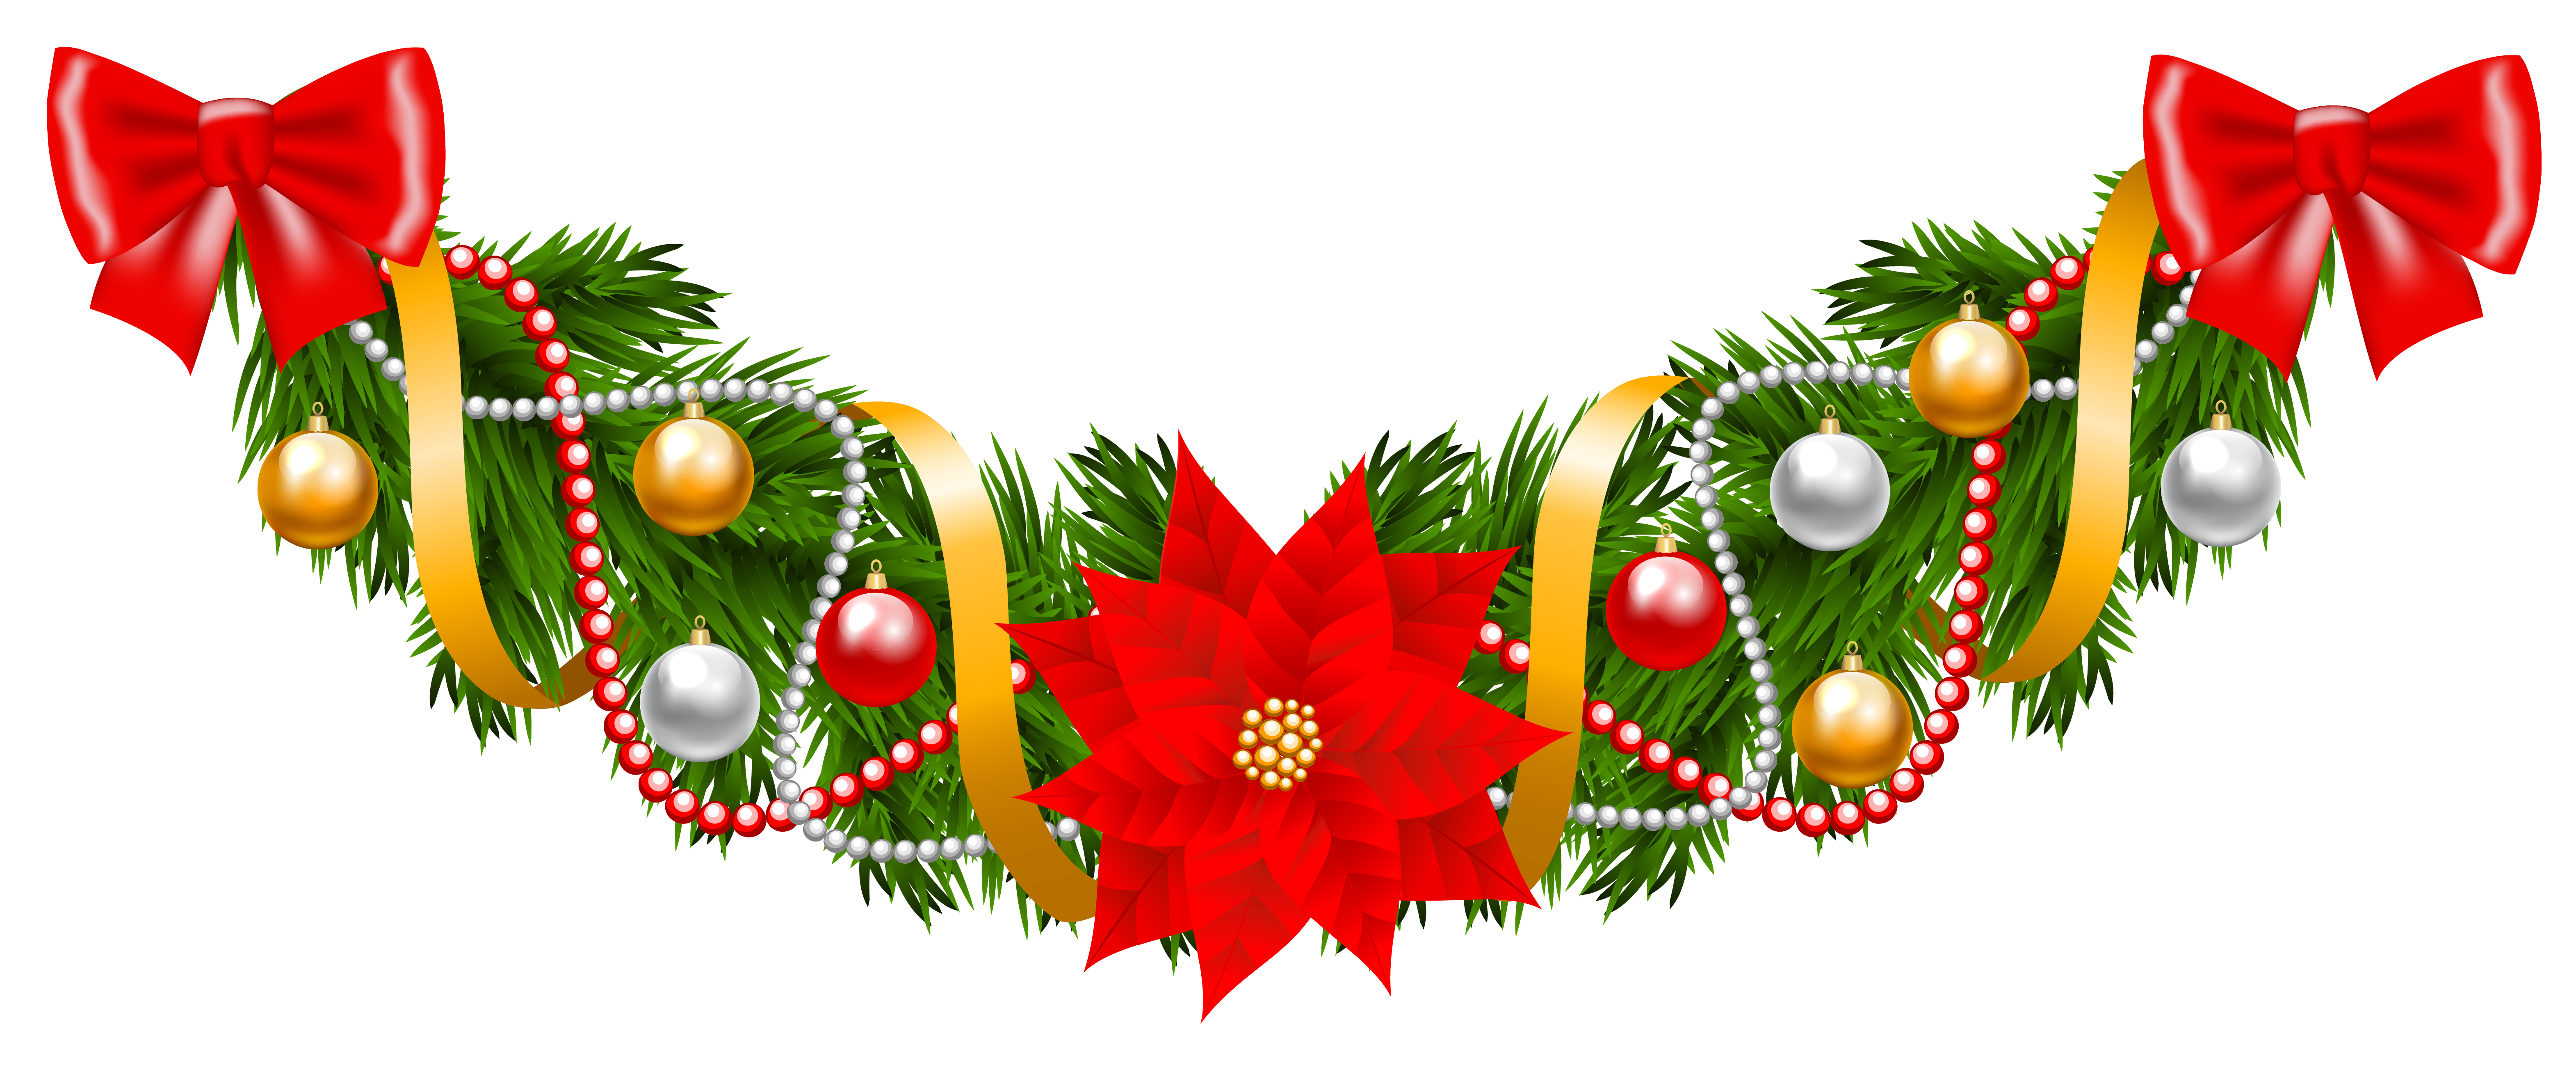 Free Christmas Garland Clip Art, Download Free Christmas Garland Clip